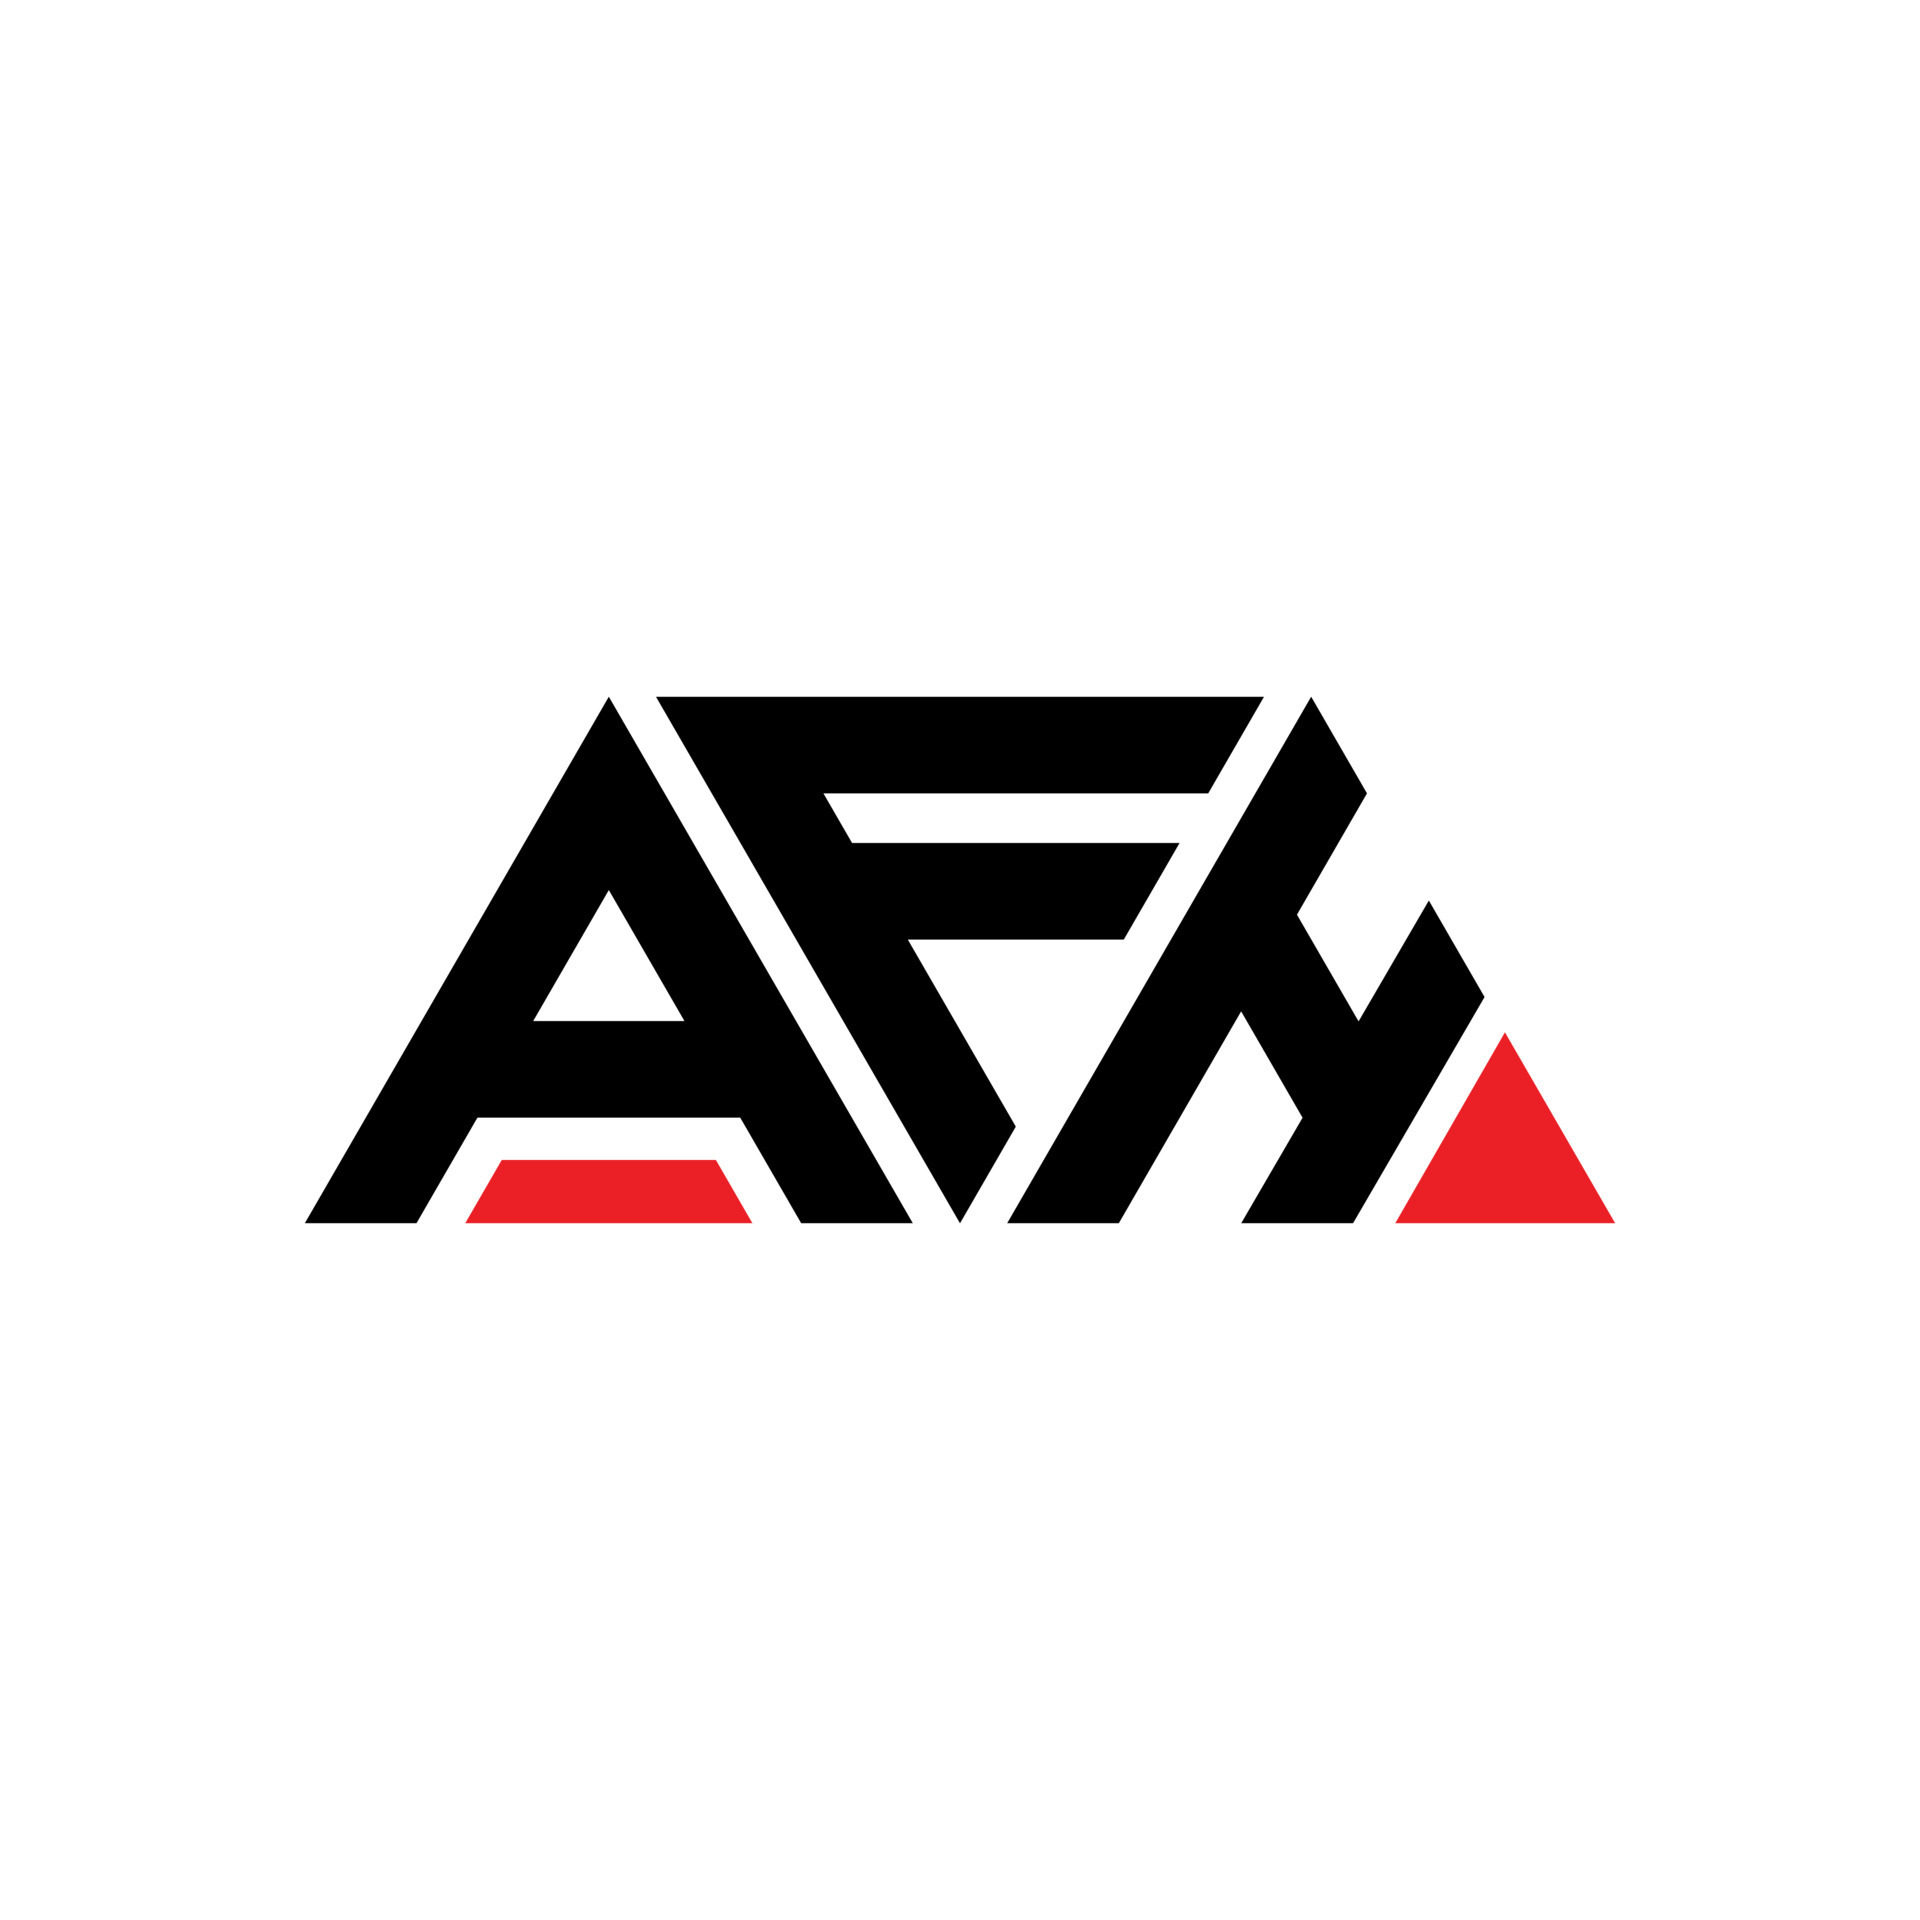 AFH triangle letter logo design with triangle shape. AFH triangle logo ...